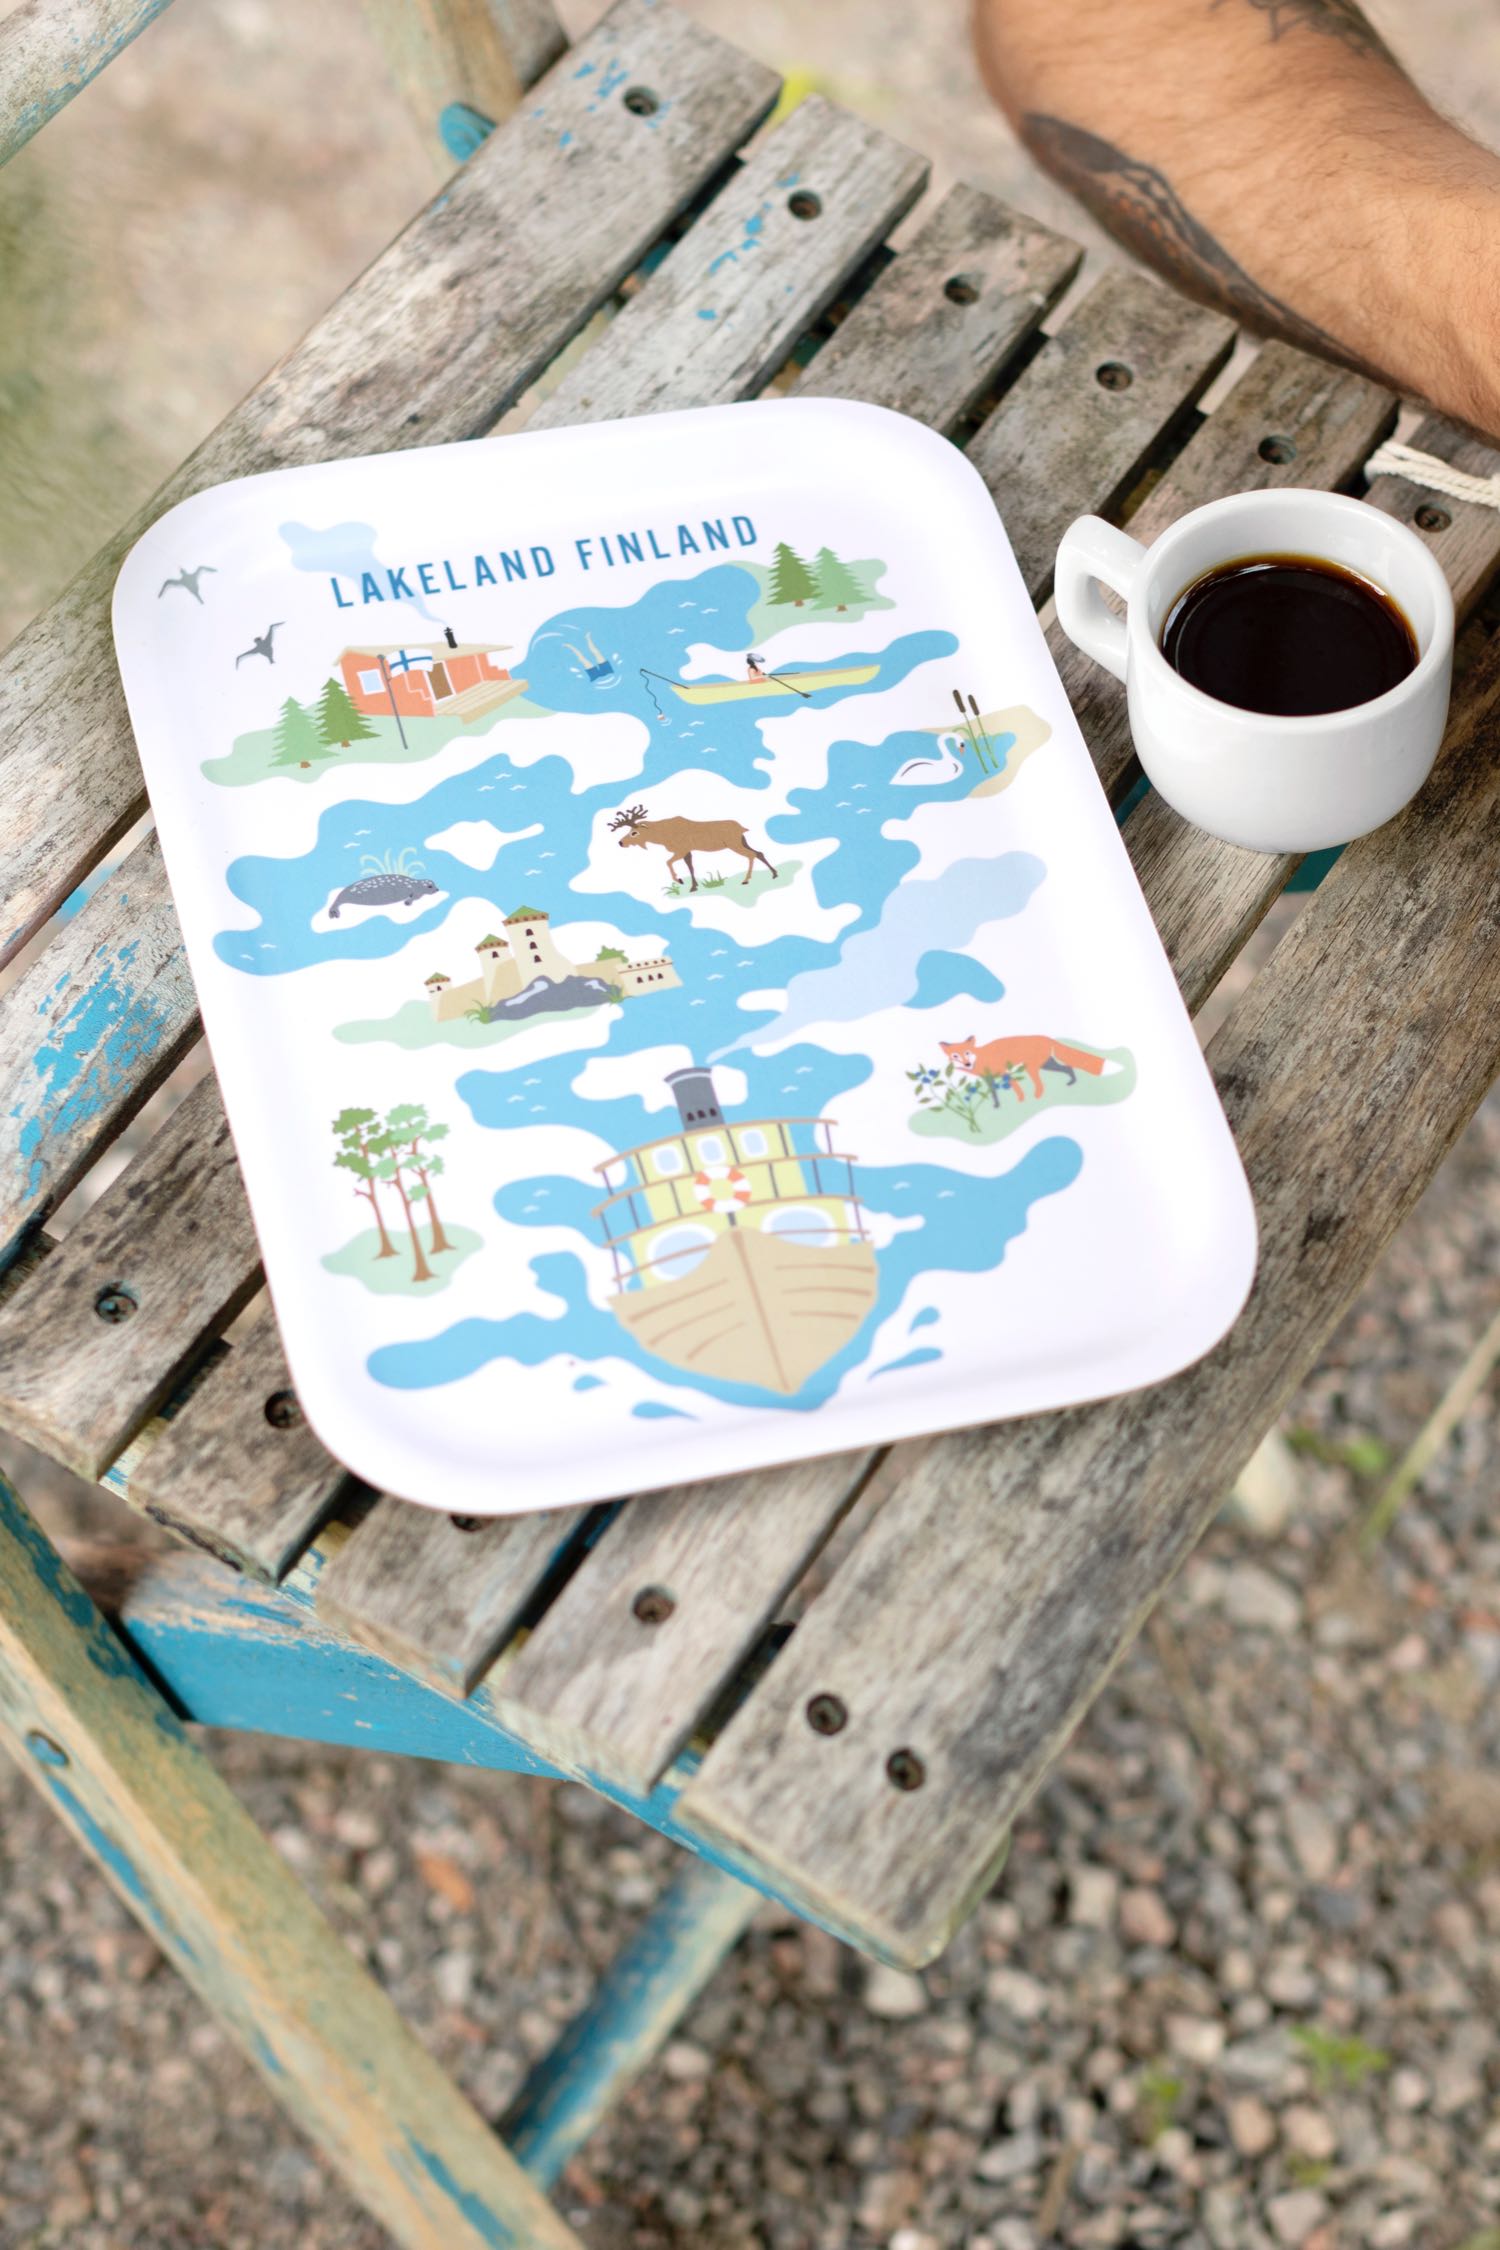 Lakeland Finland tray